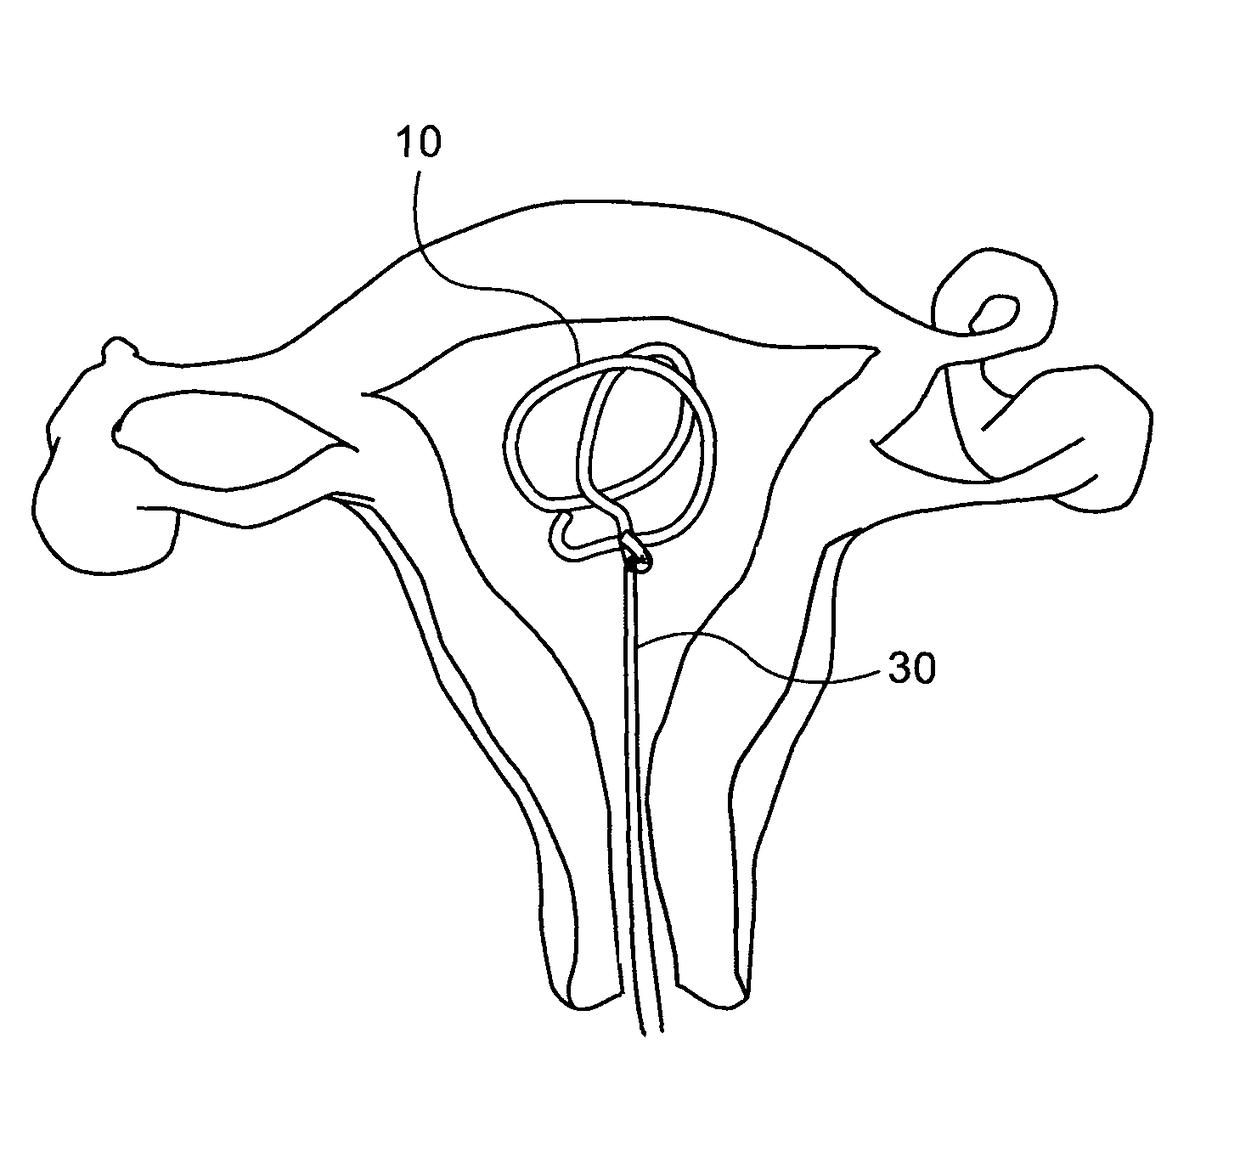 Intra uterine device